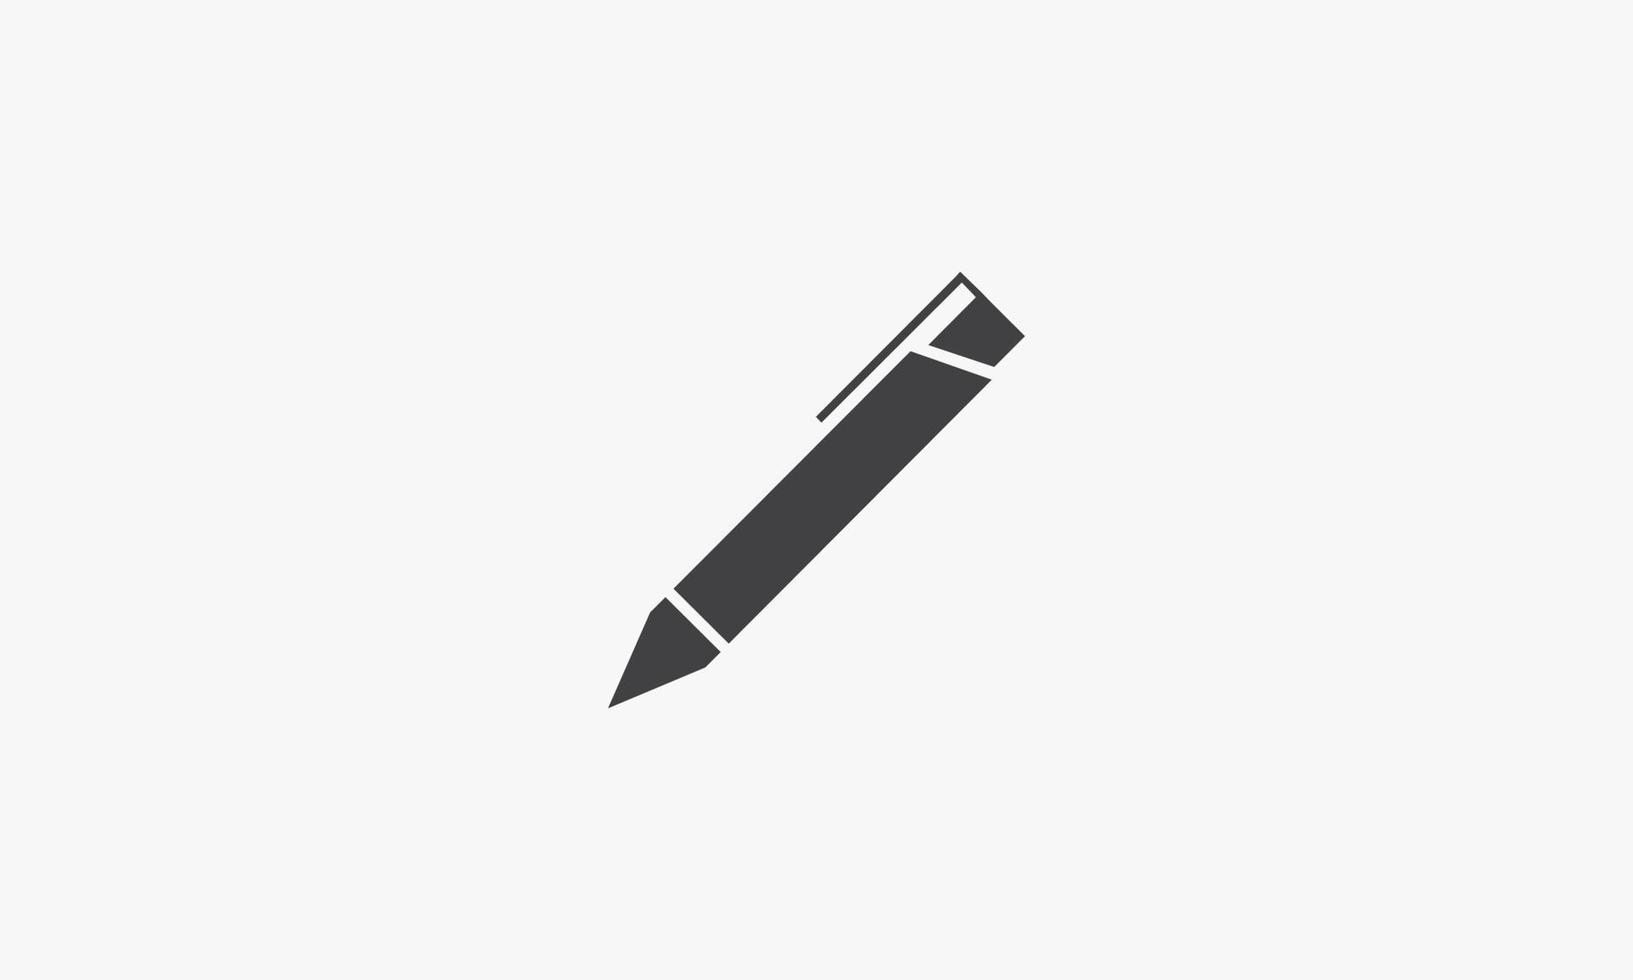 pen vector illustration on white background. creative icon.